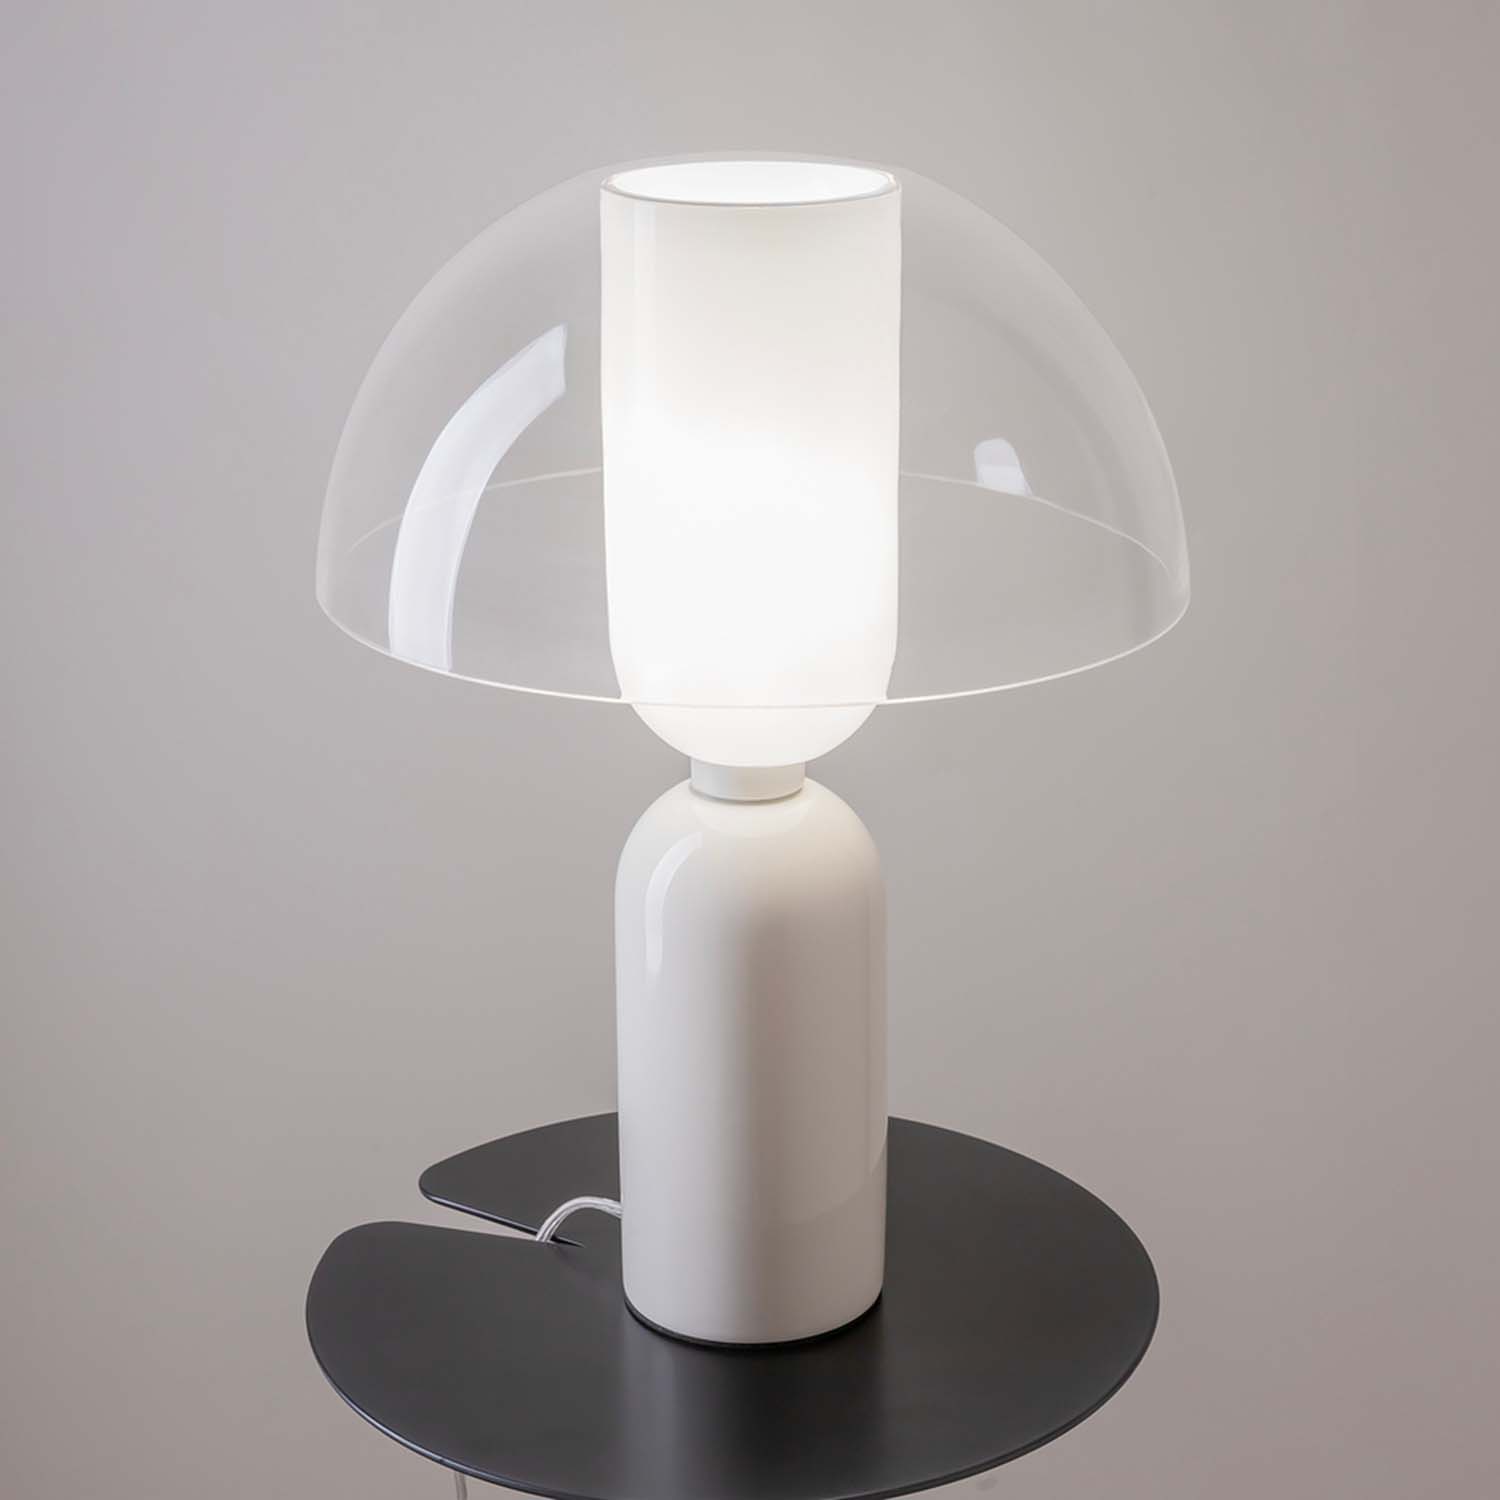 MEMORY - White ceramic bedside lamp